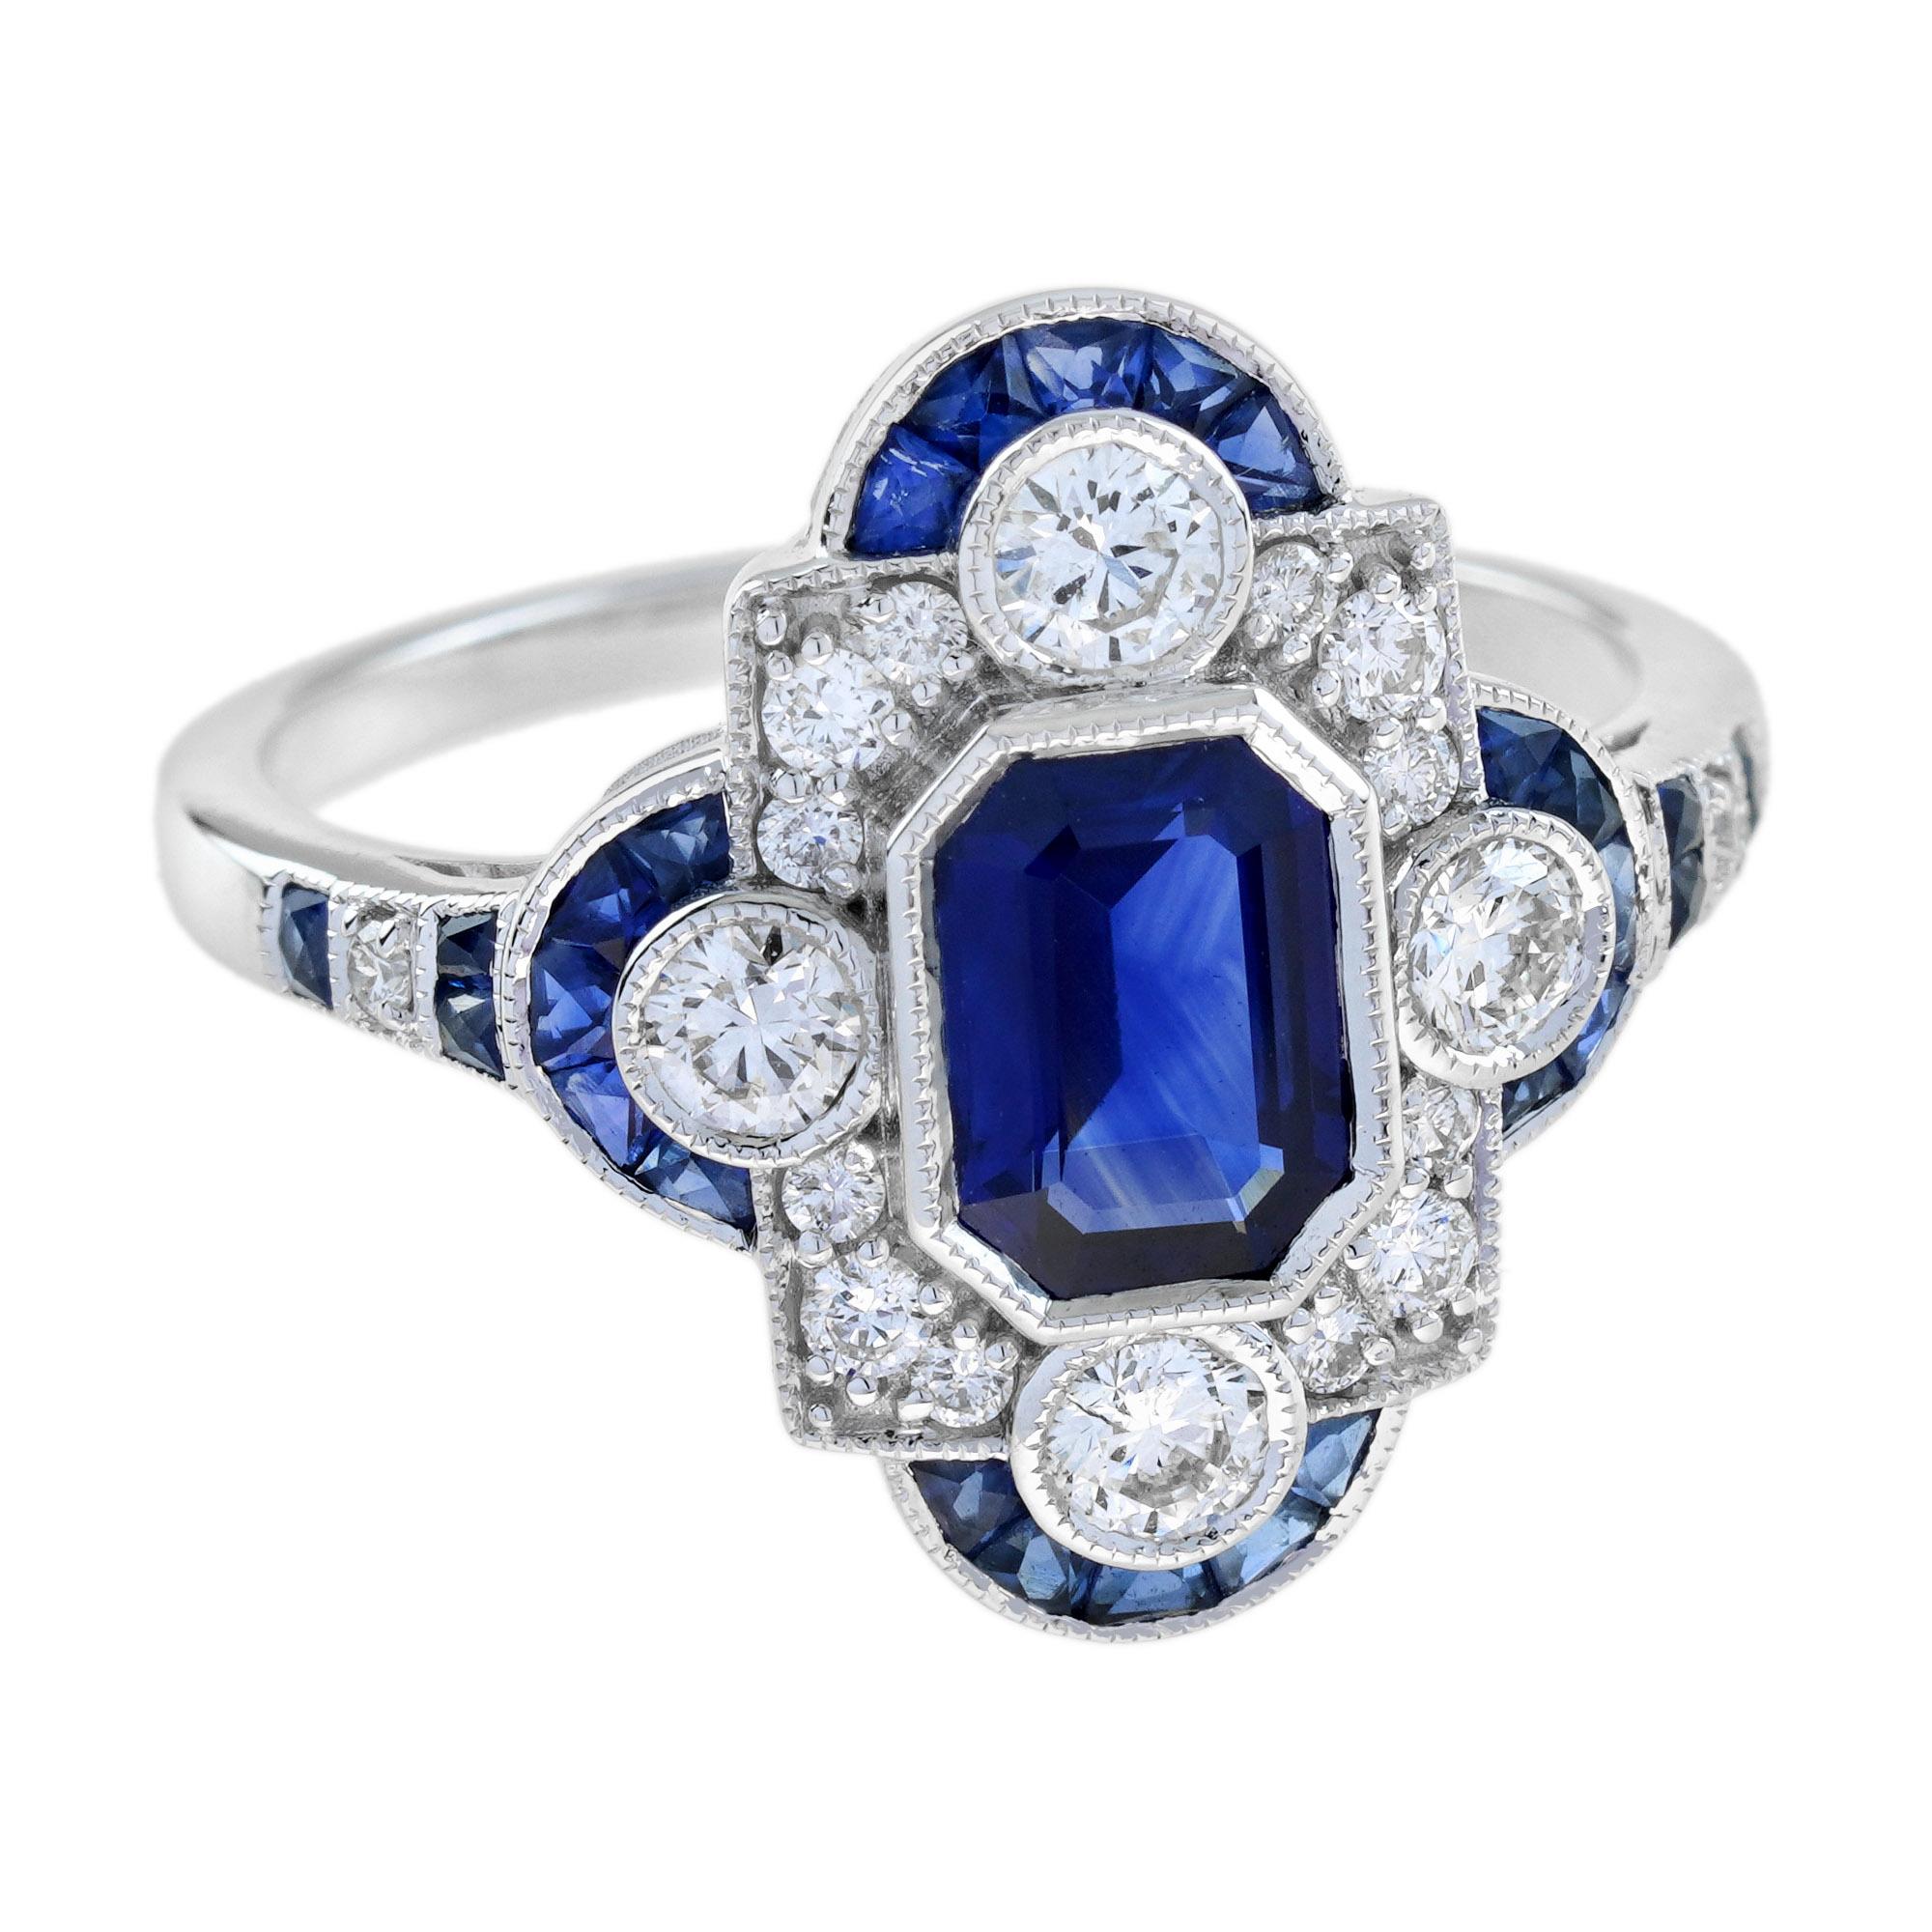 Emerald Cut Ceylon Sapphire and Diamond Art Deco Style Halo Ring in 18K Gold 2